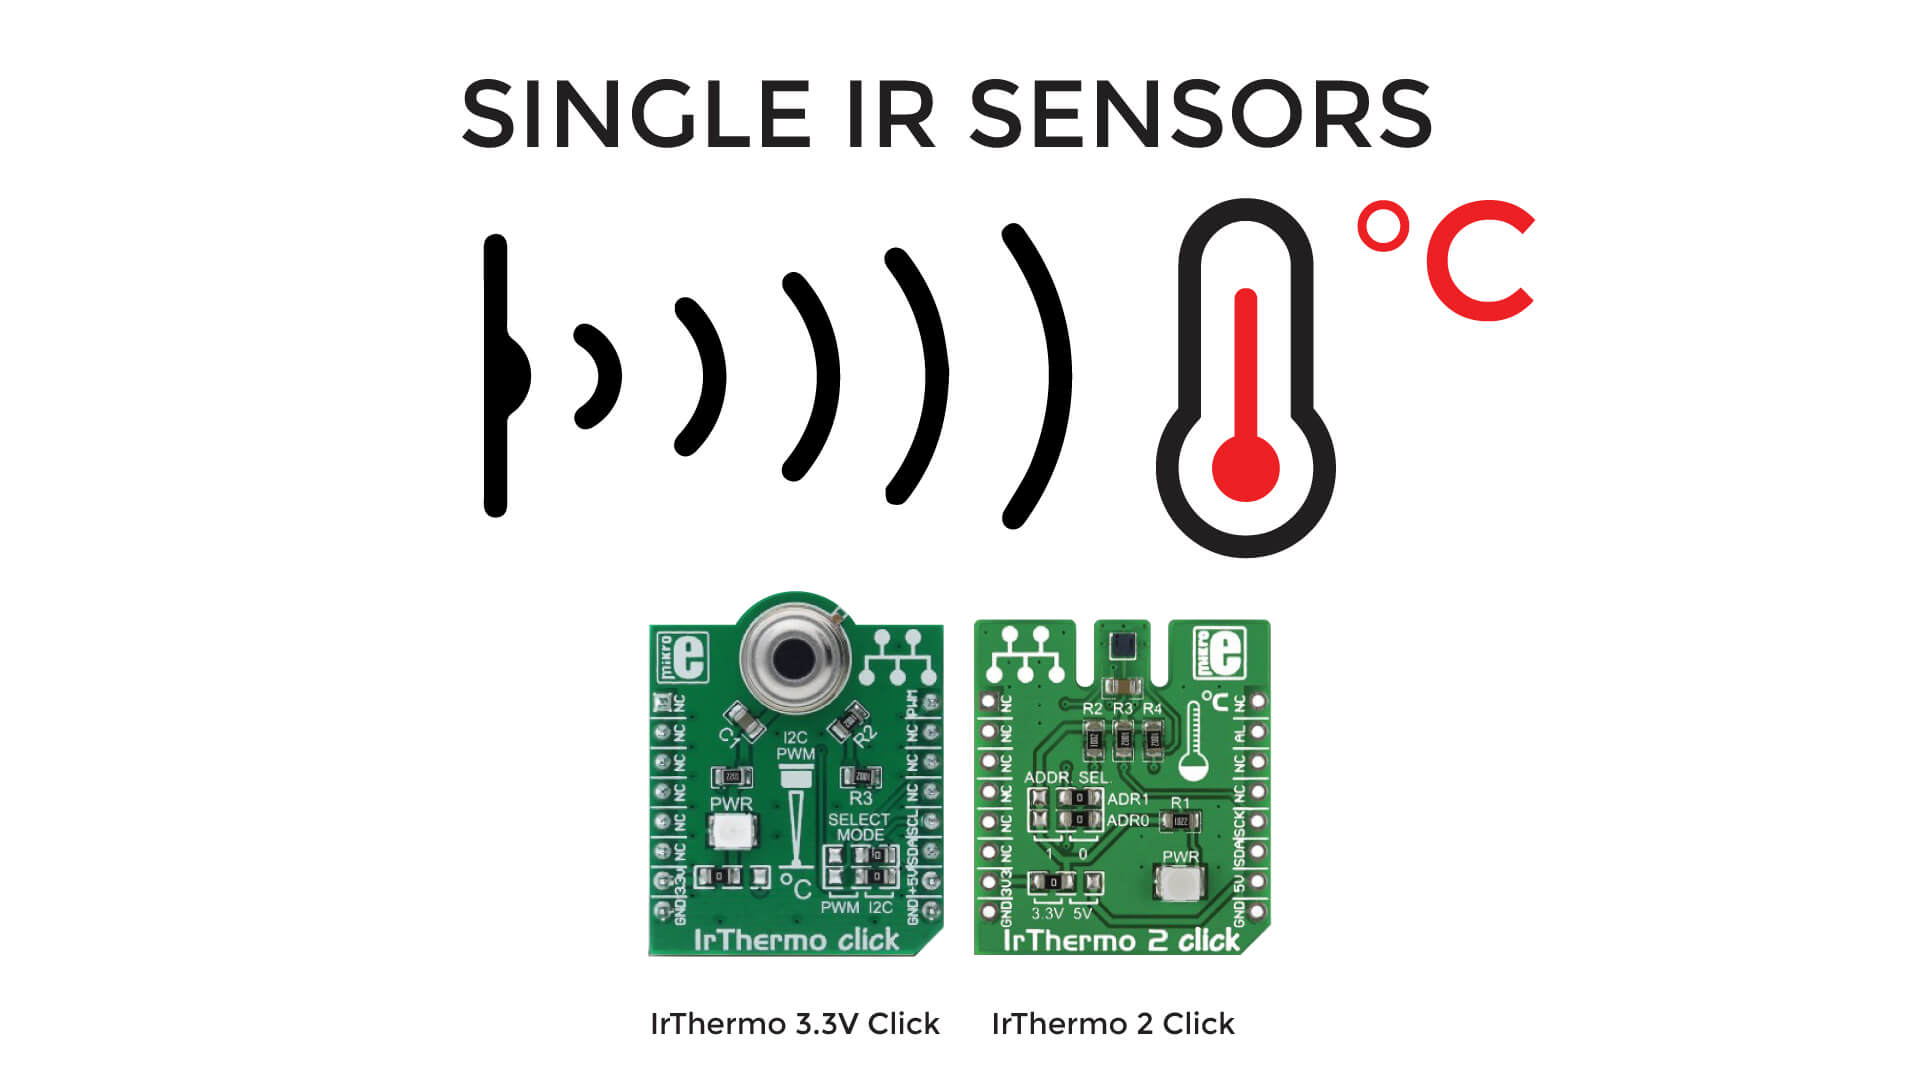 Single IR sensore clicks